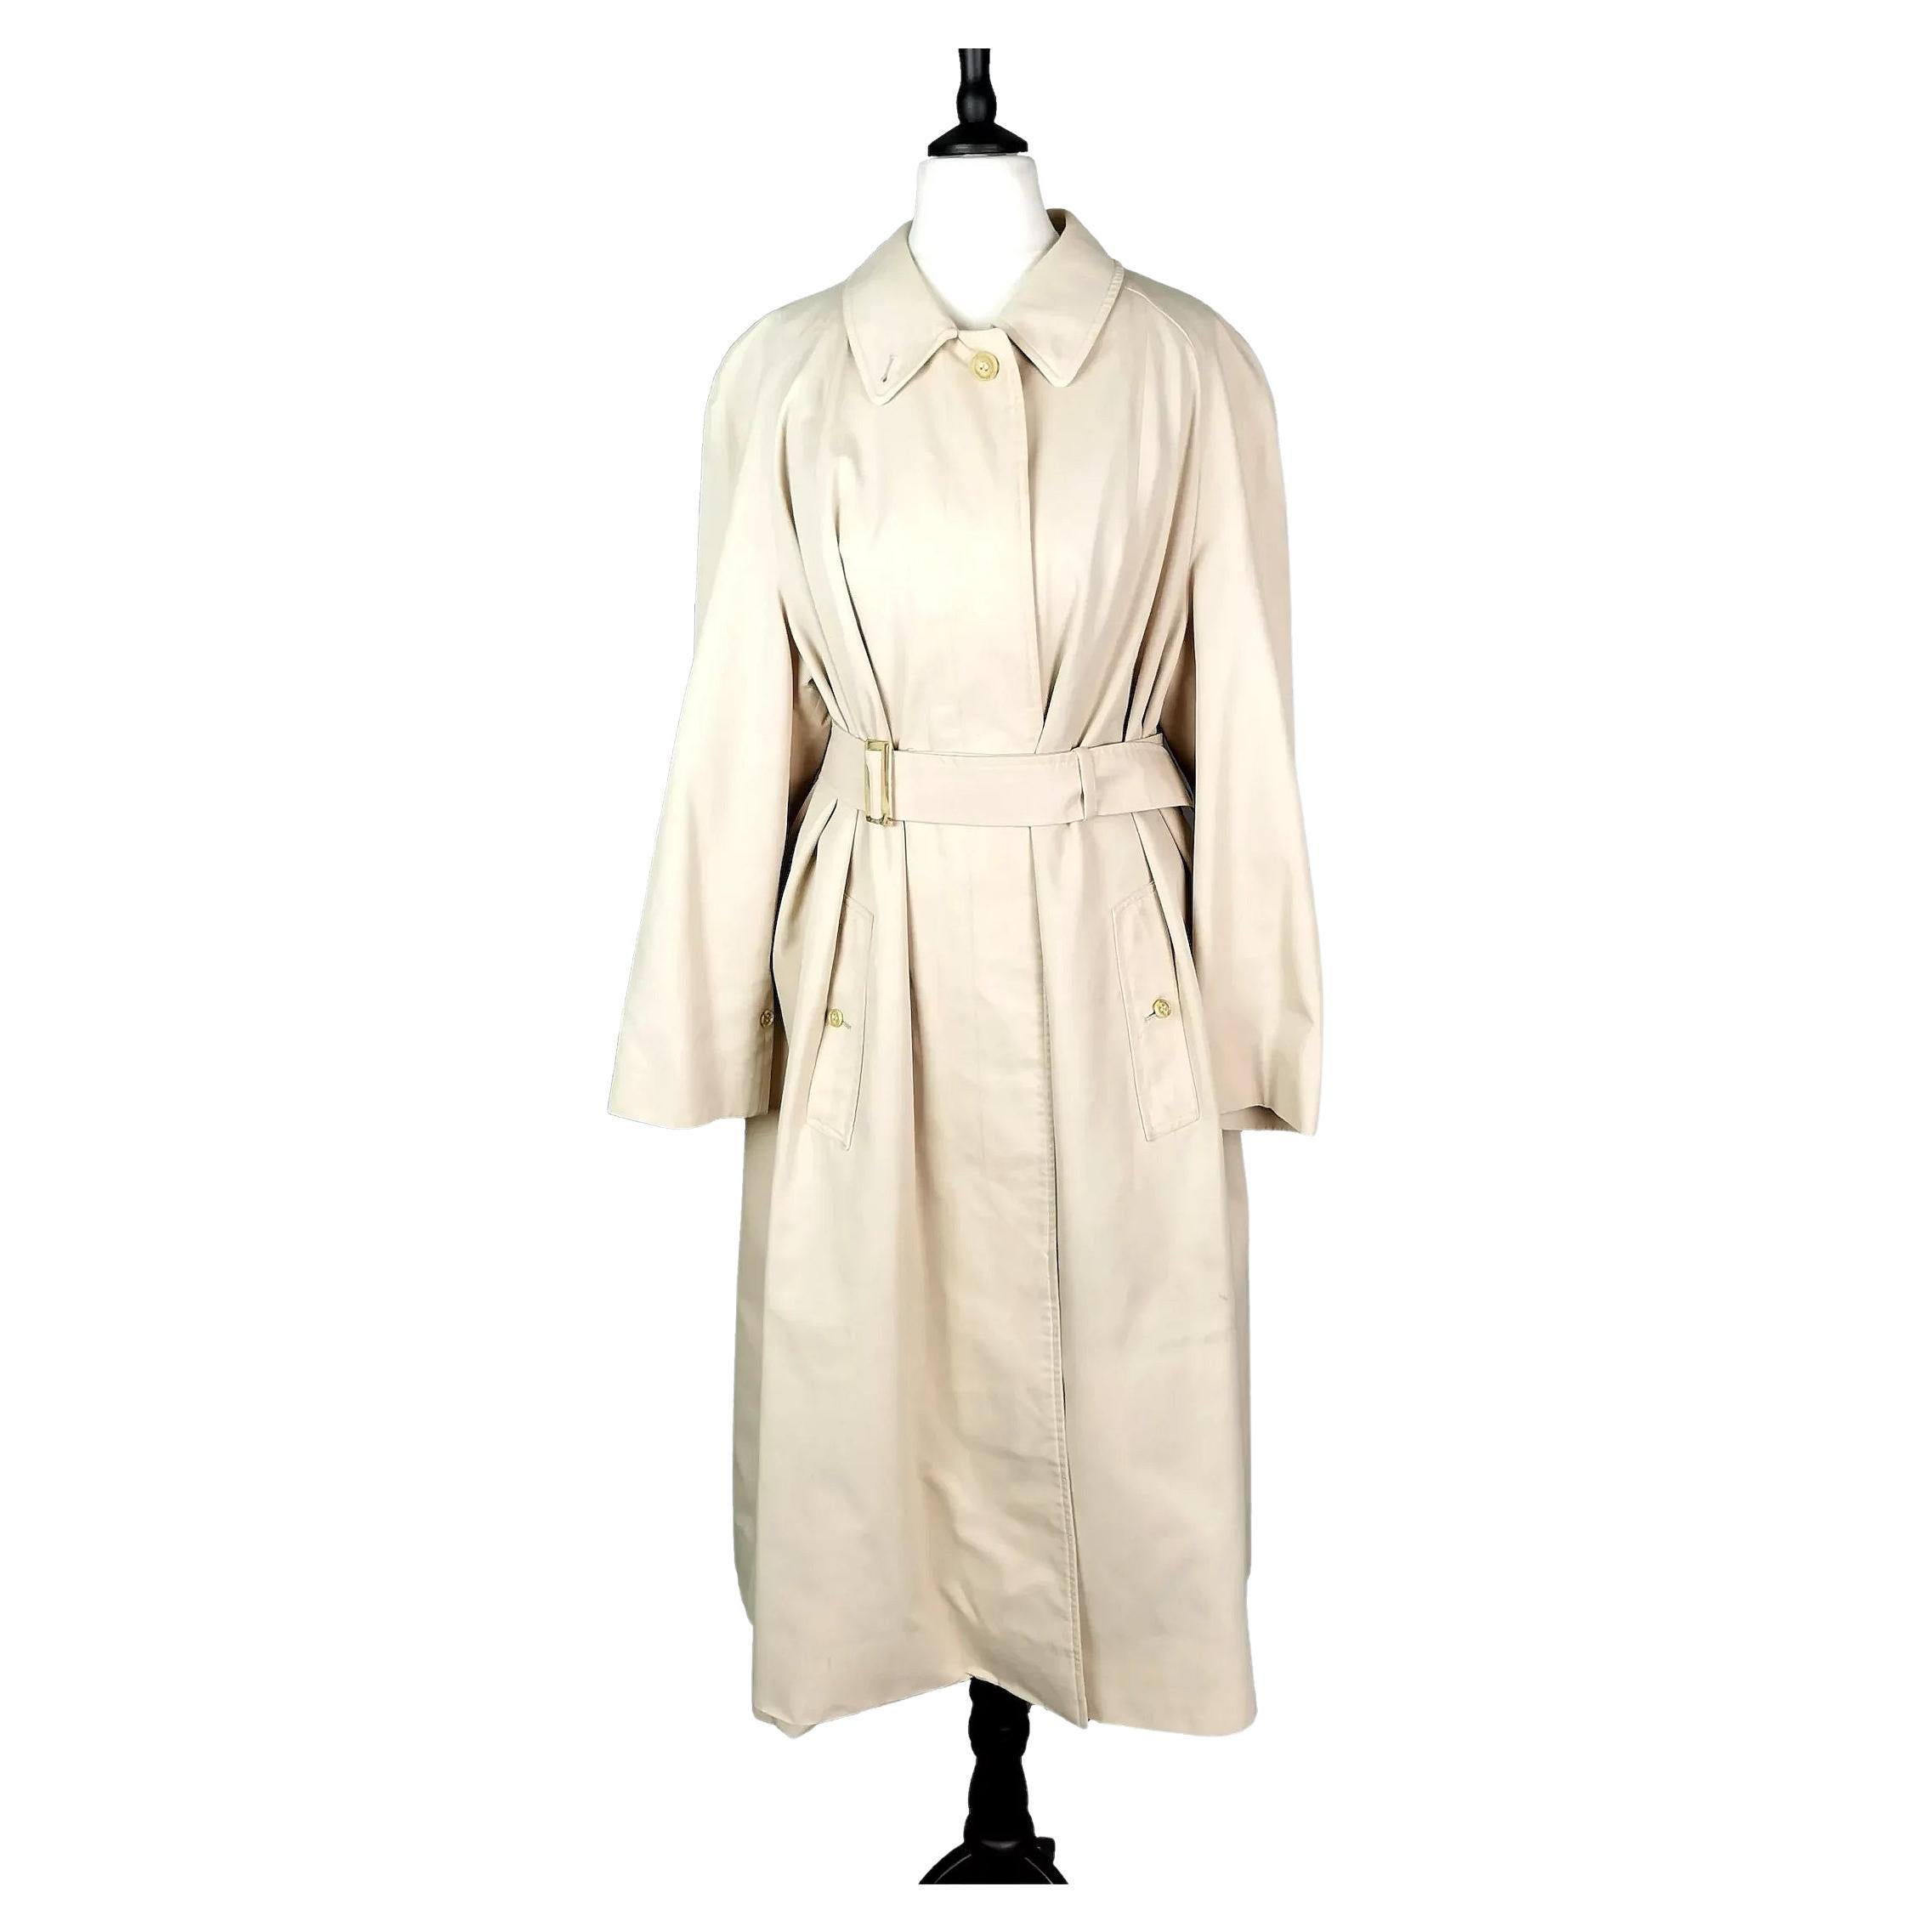 Vintage Ladies Burberry Prorsum trench coat, classic